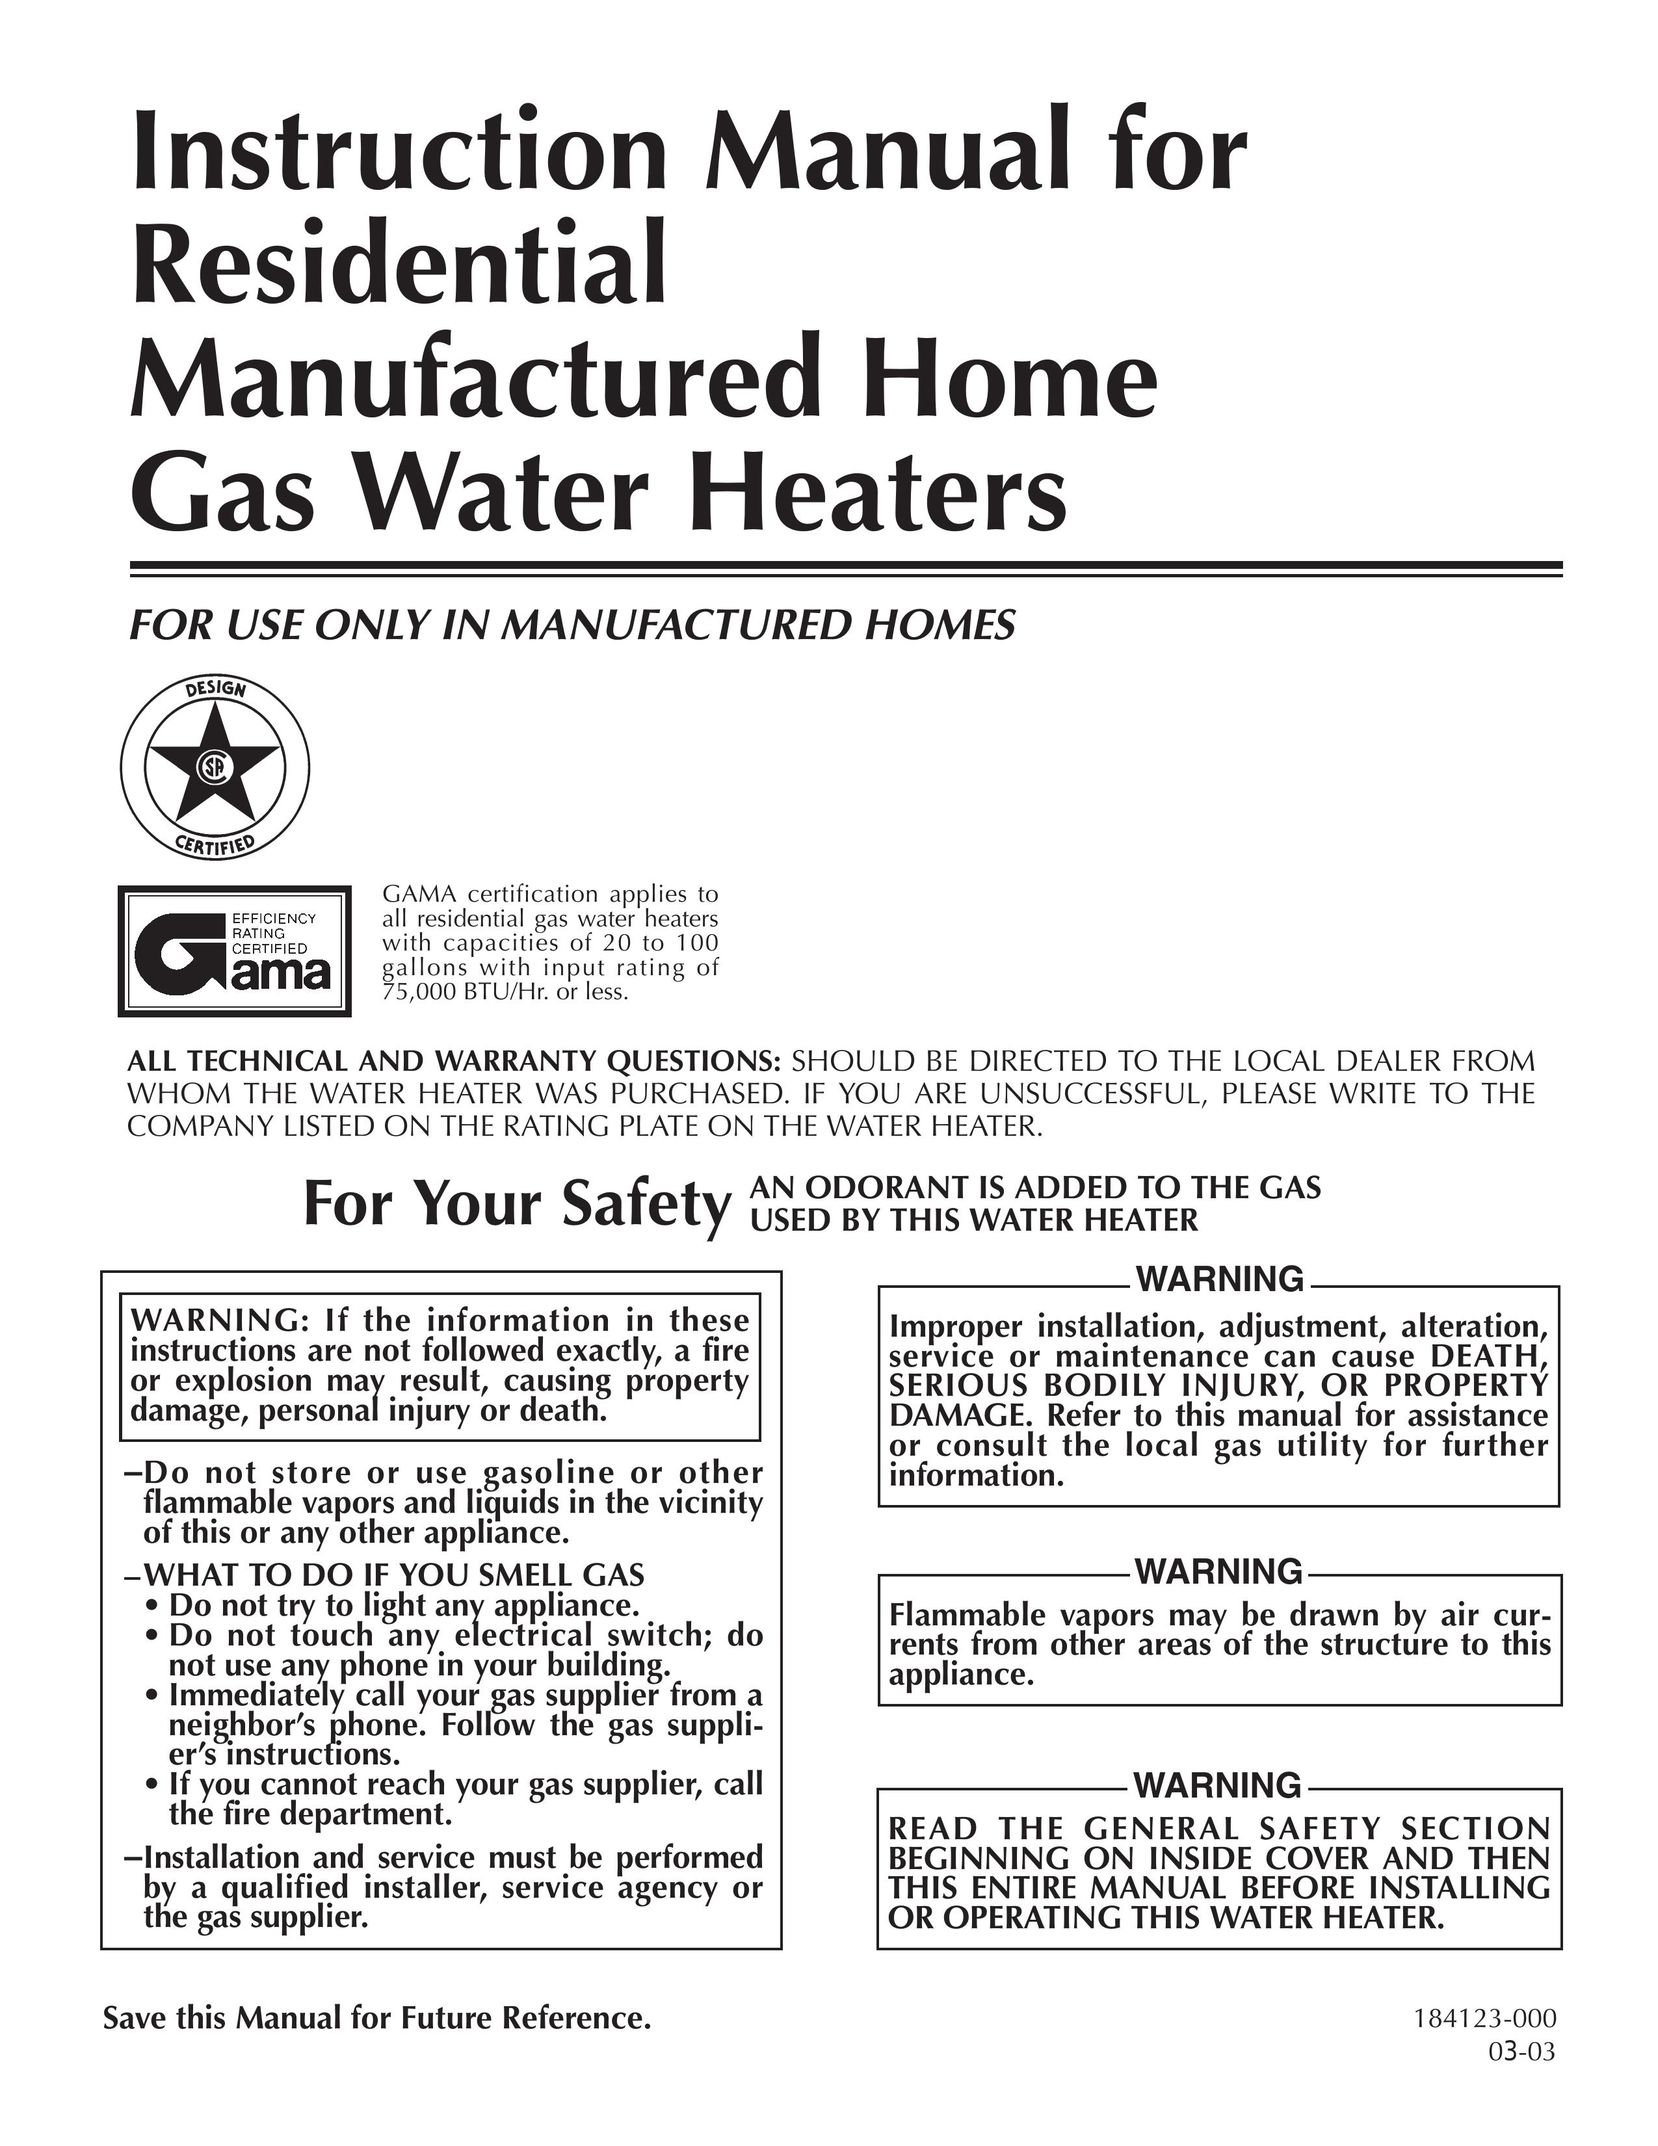 Reliance Water Heaters 184123-000 Water Heater User Manual